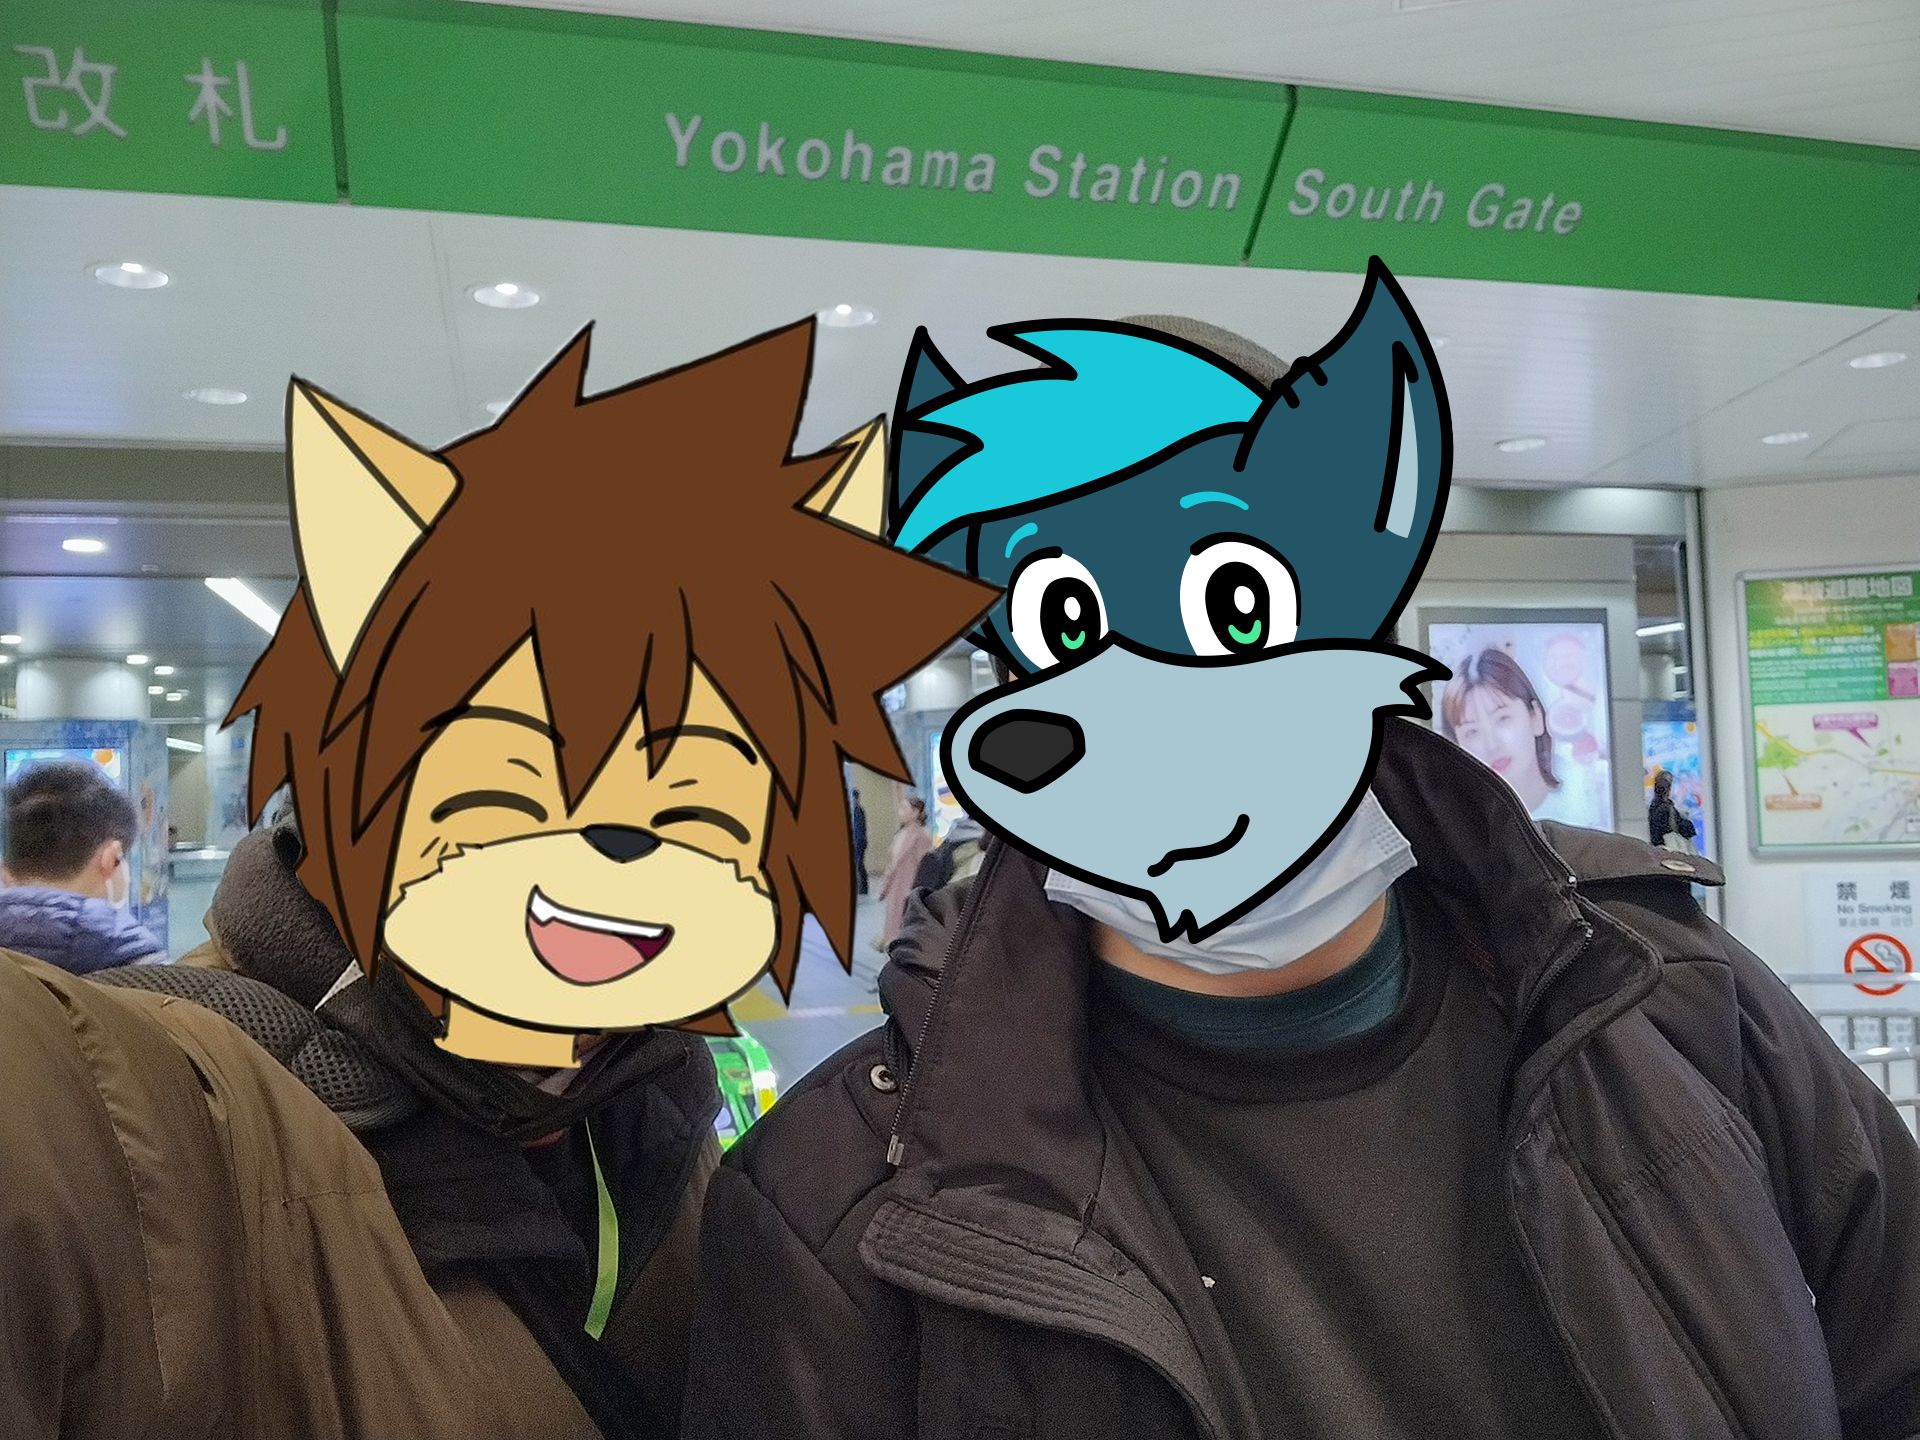 Me and Raxki at Yokohama Station